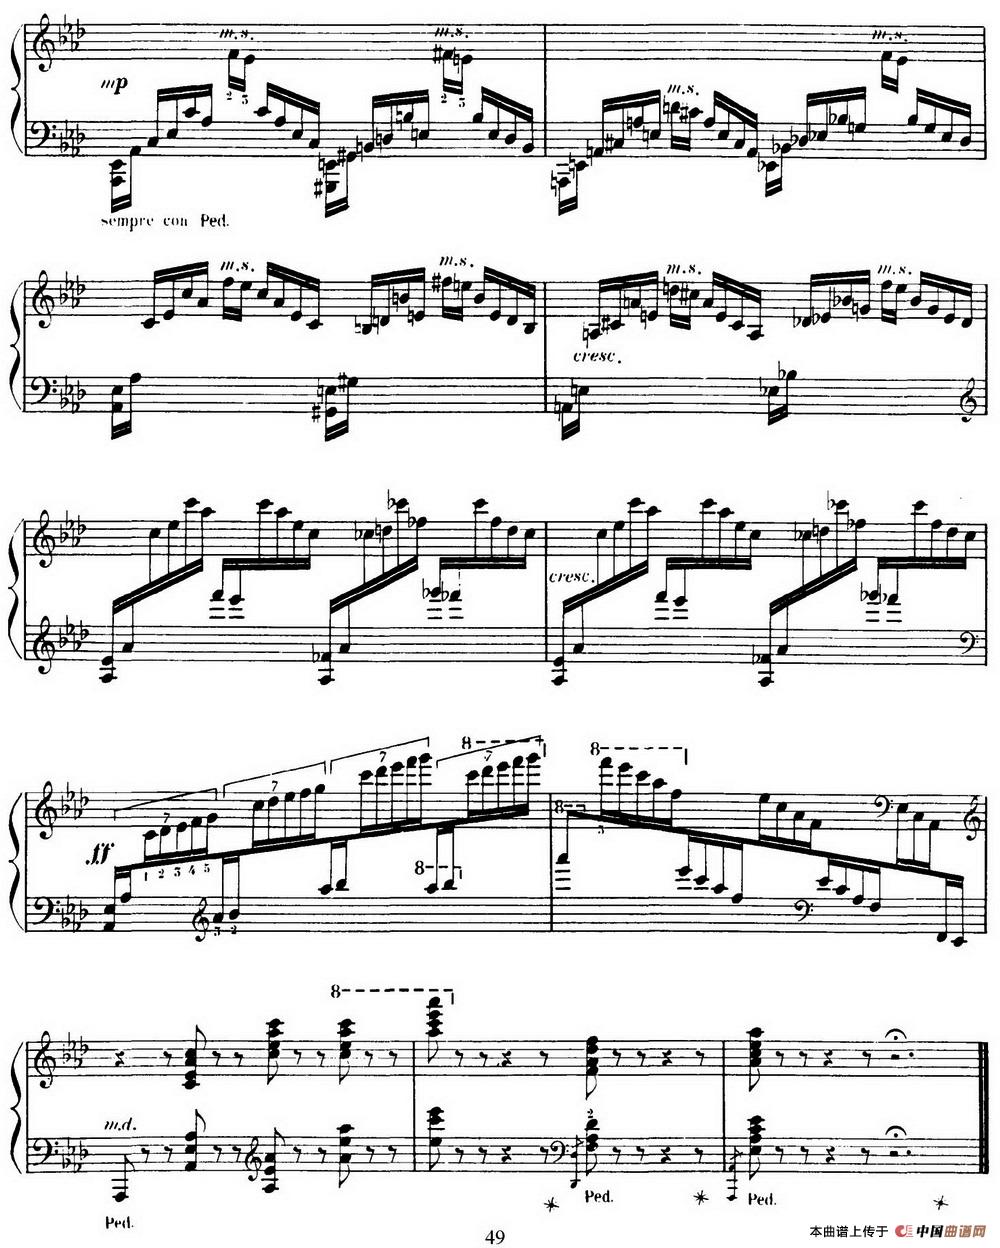 15 Etudes de Virtuosité Op.72 No.11（十五首钢琴练习曲之十一）(1)_049-.jpg